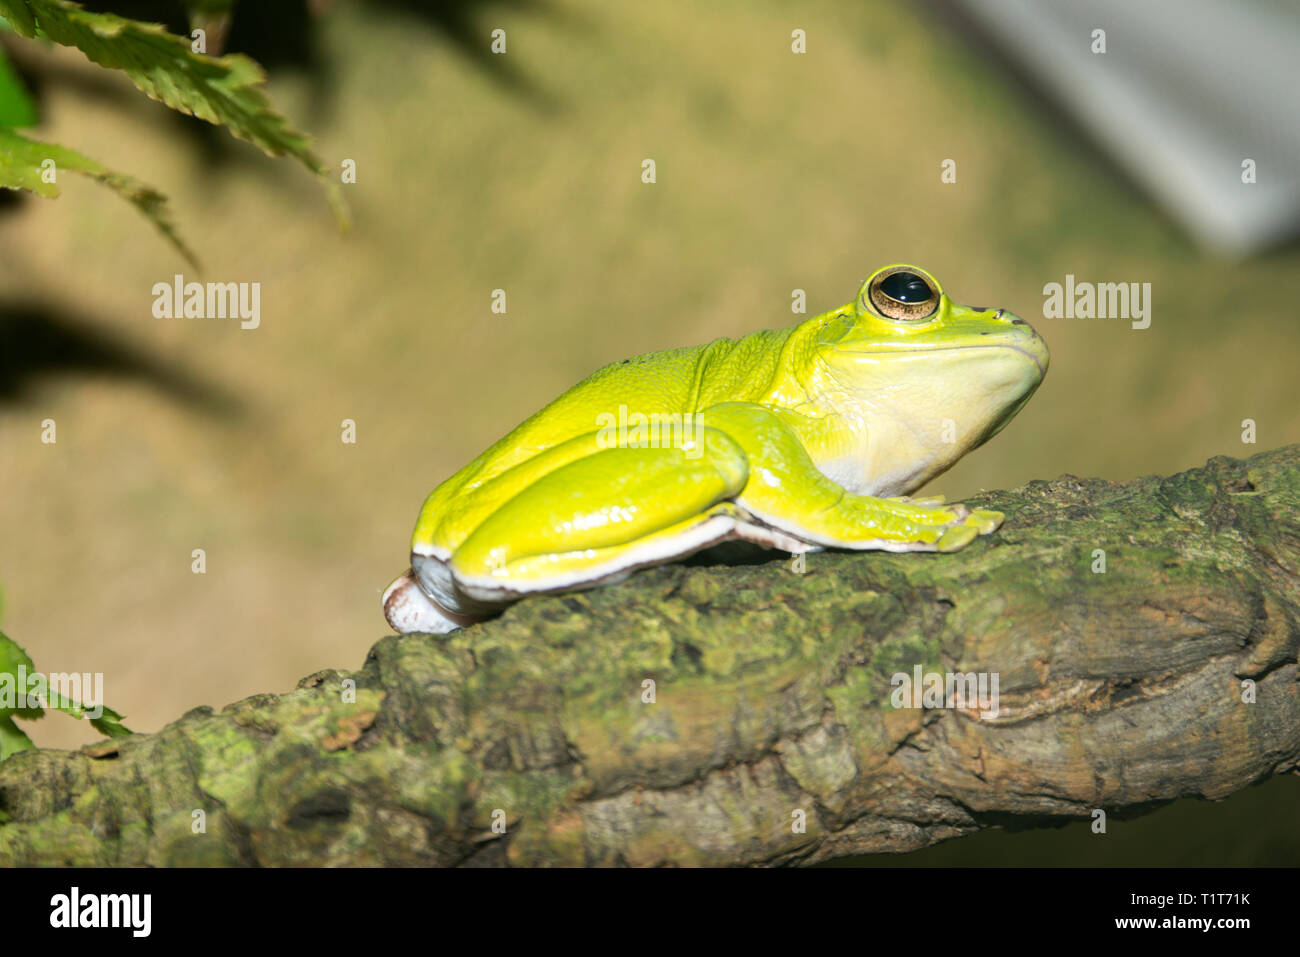 Chinese Gliding Frog (Rhacophorus dennysi) Stock Photo